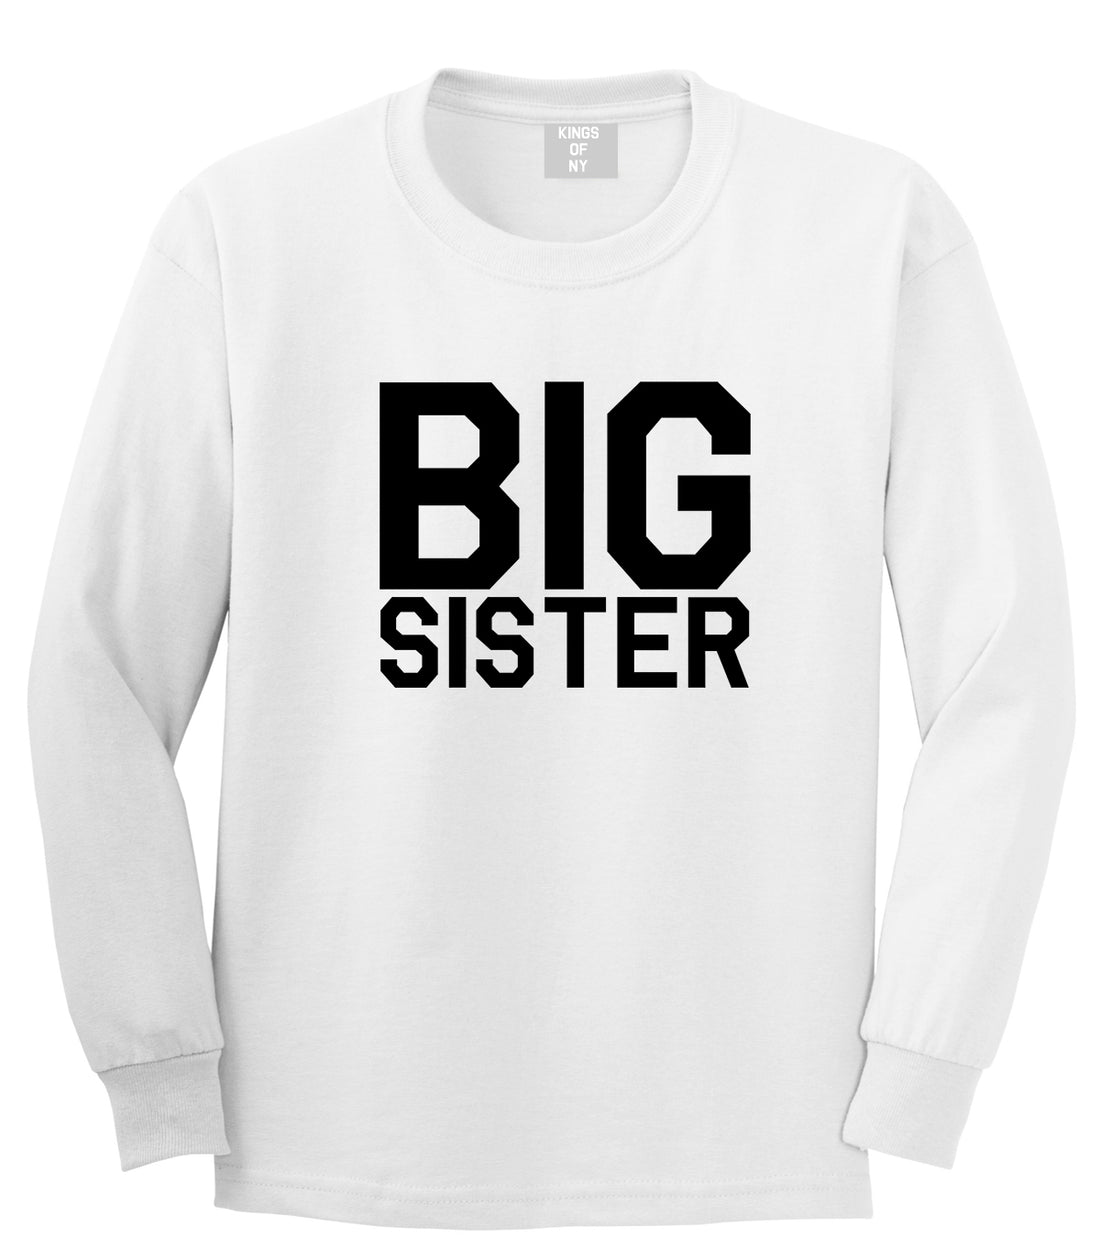 Big Sister White Long Sleeve T-Shirt by Kings Of NY